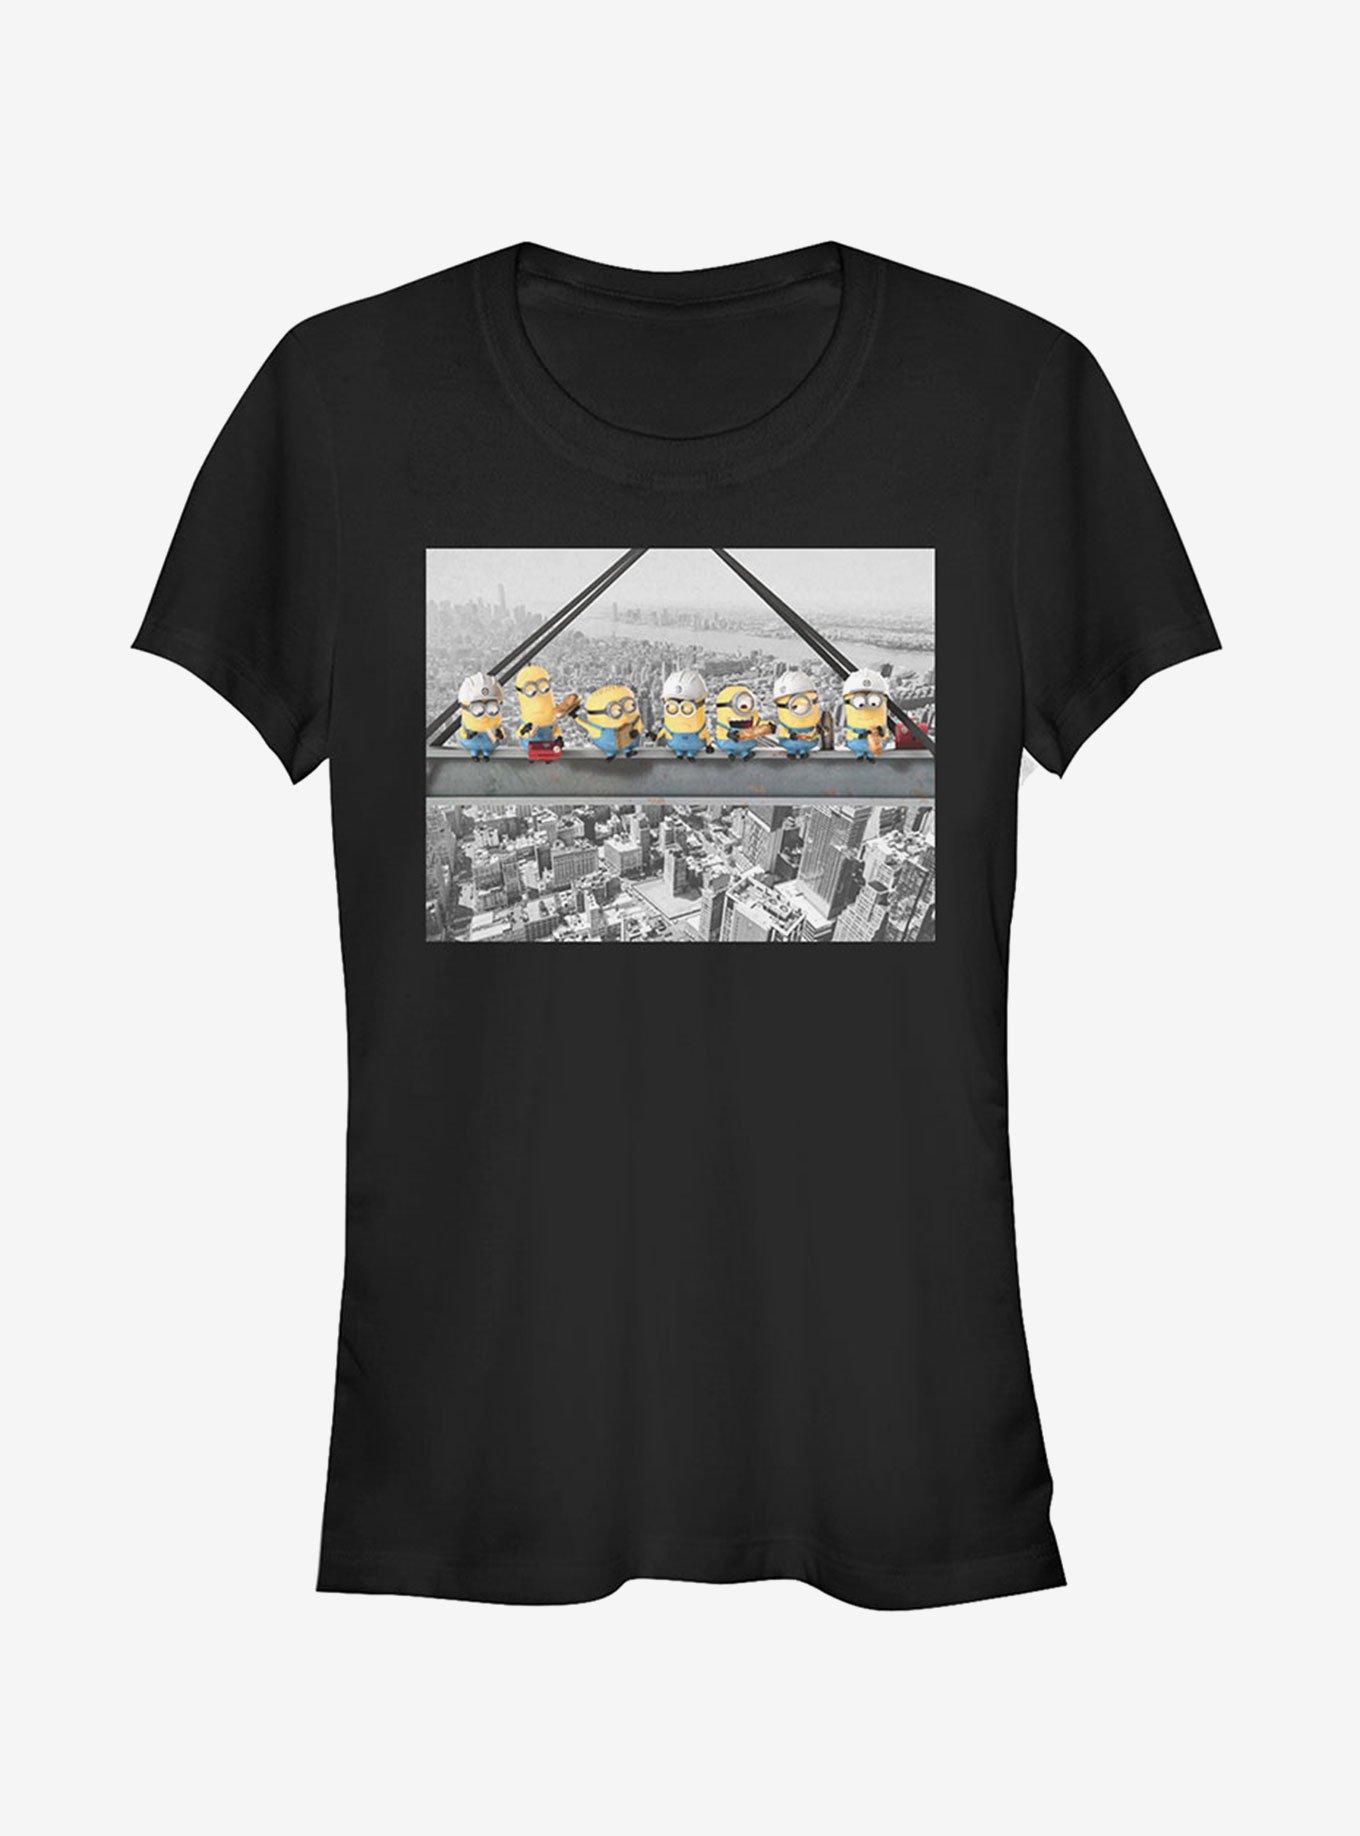 Minion Construction Lunch Girls T-Shirt, BLACK, hi-res